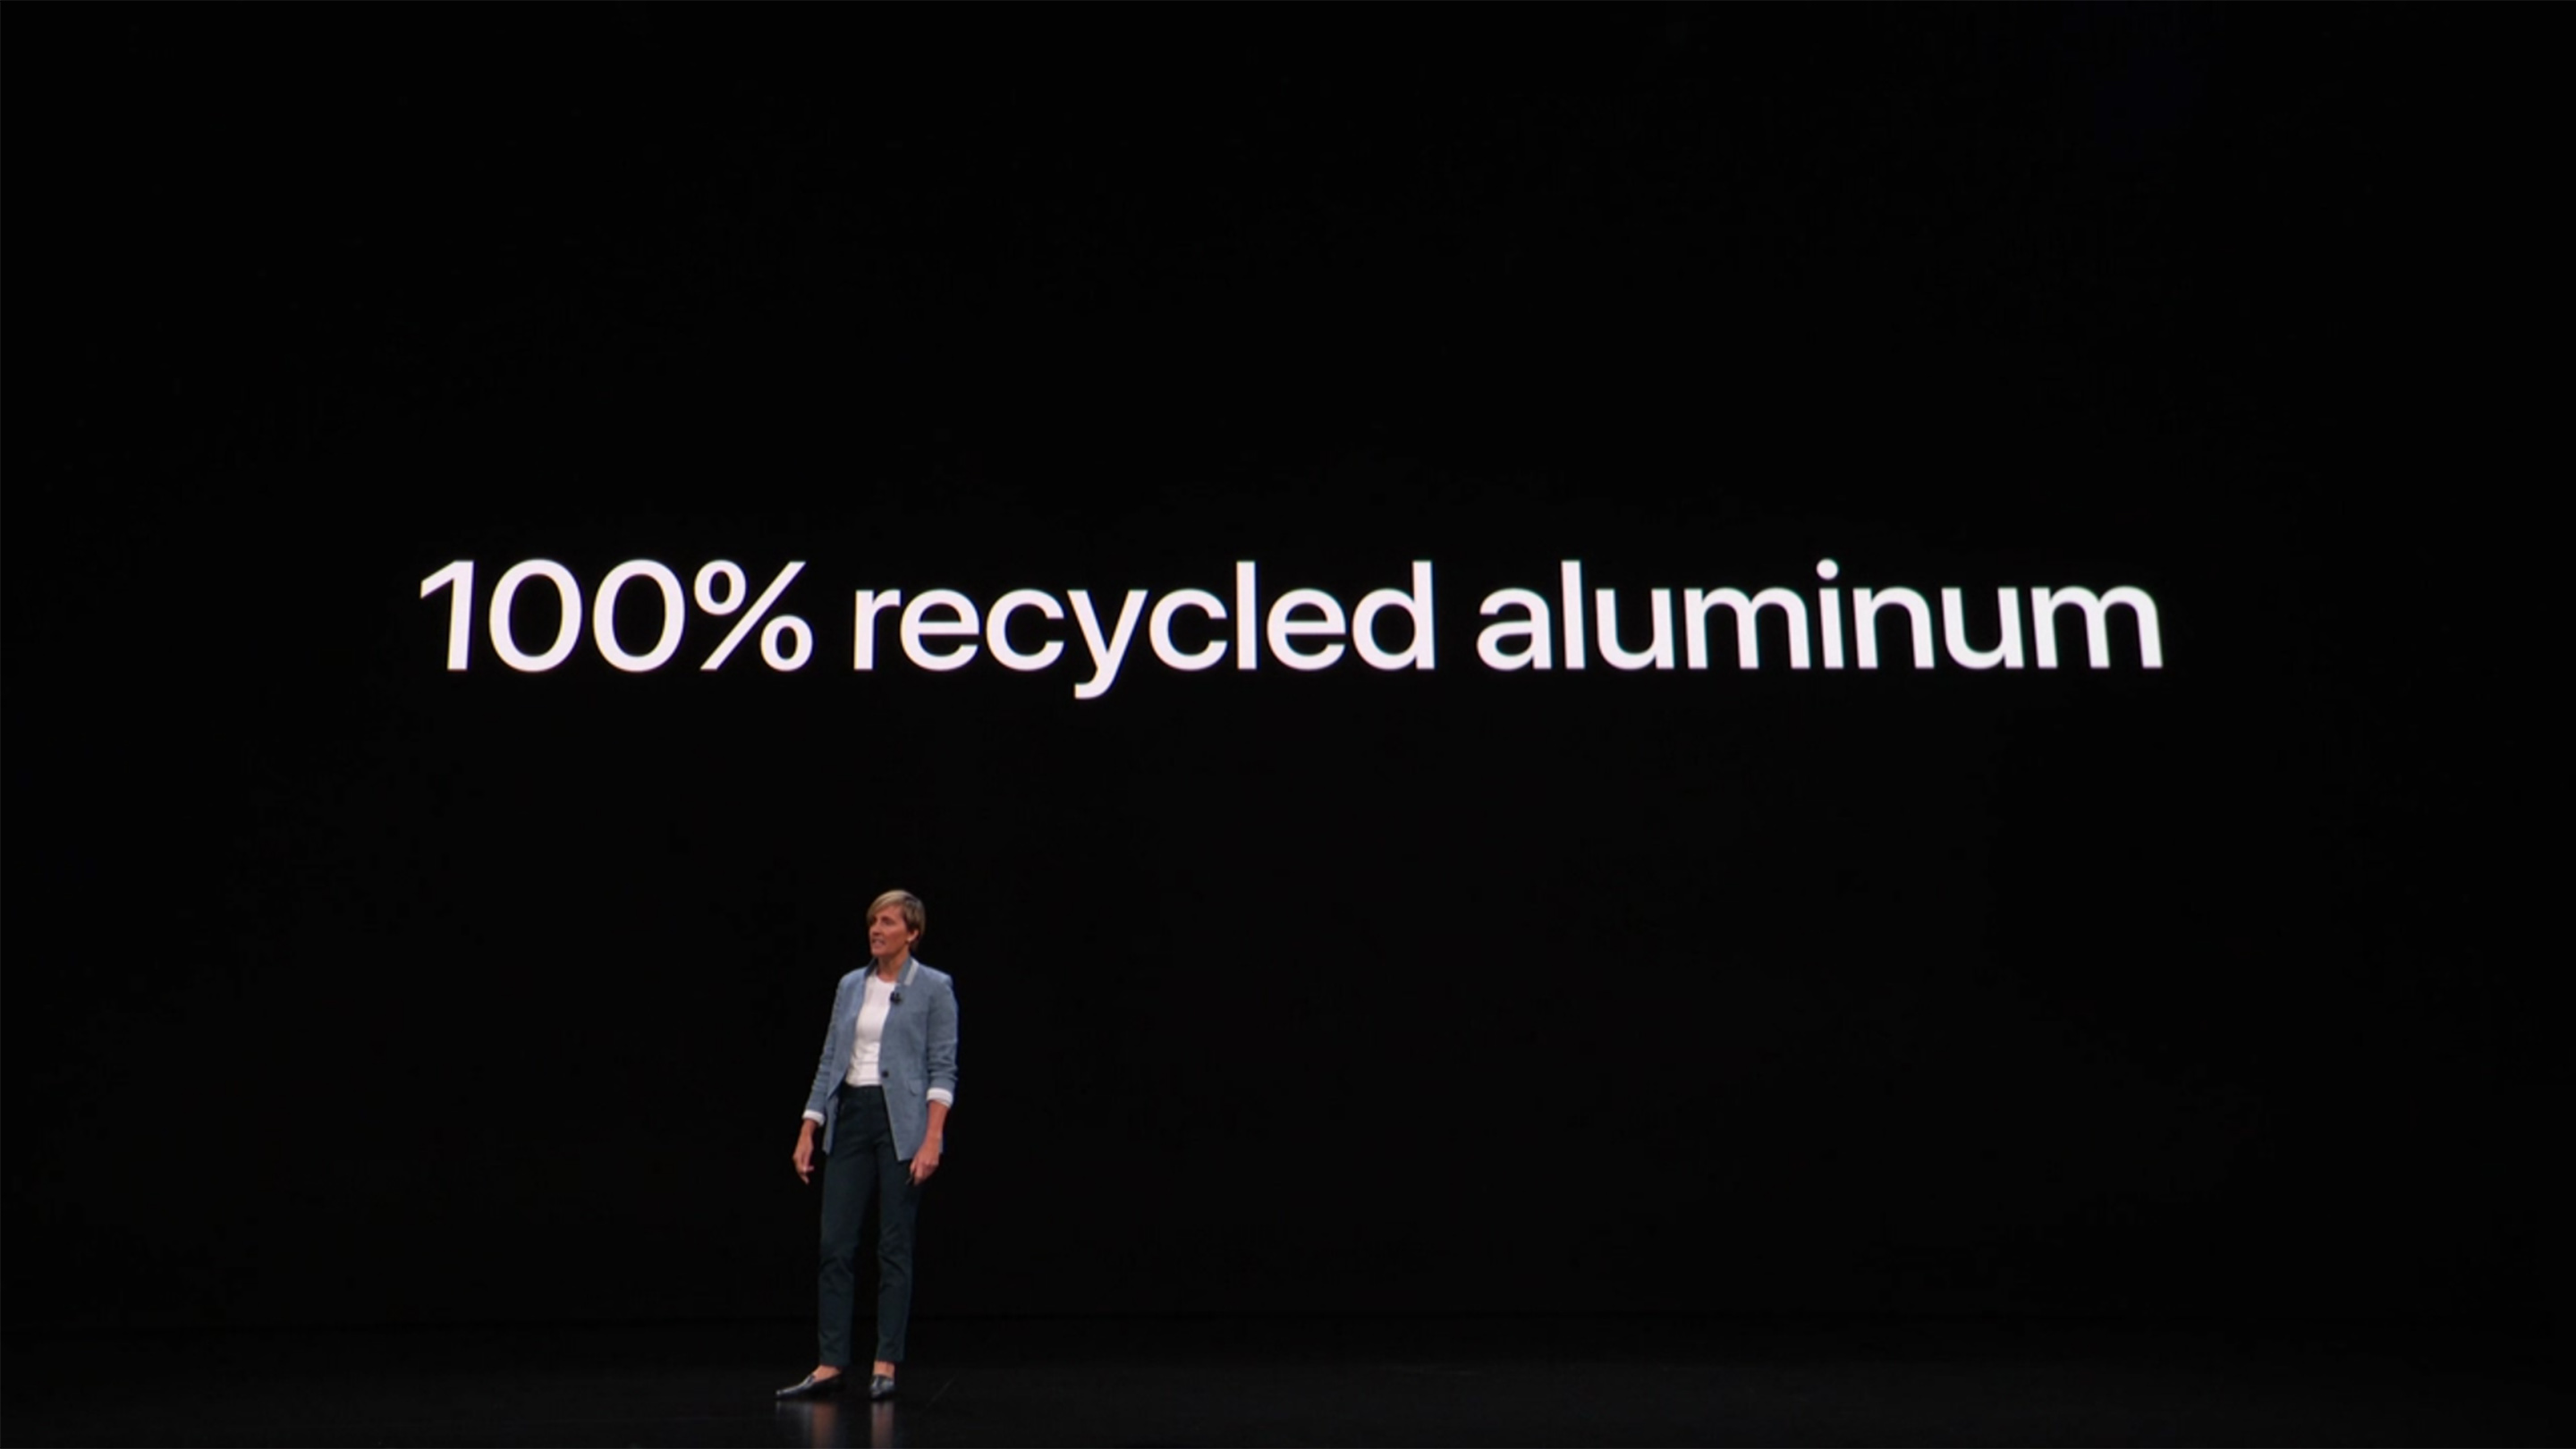 MacBook Air uses 100 percent recycled aluminum